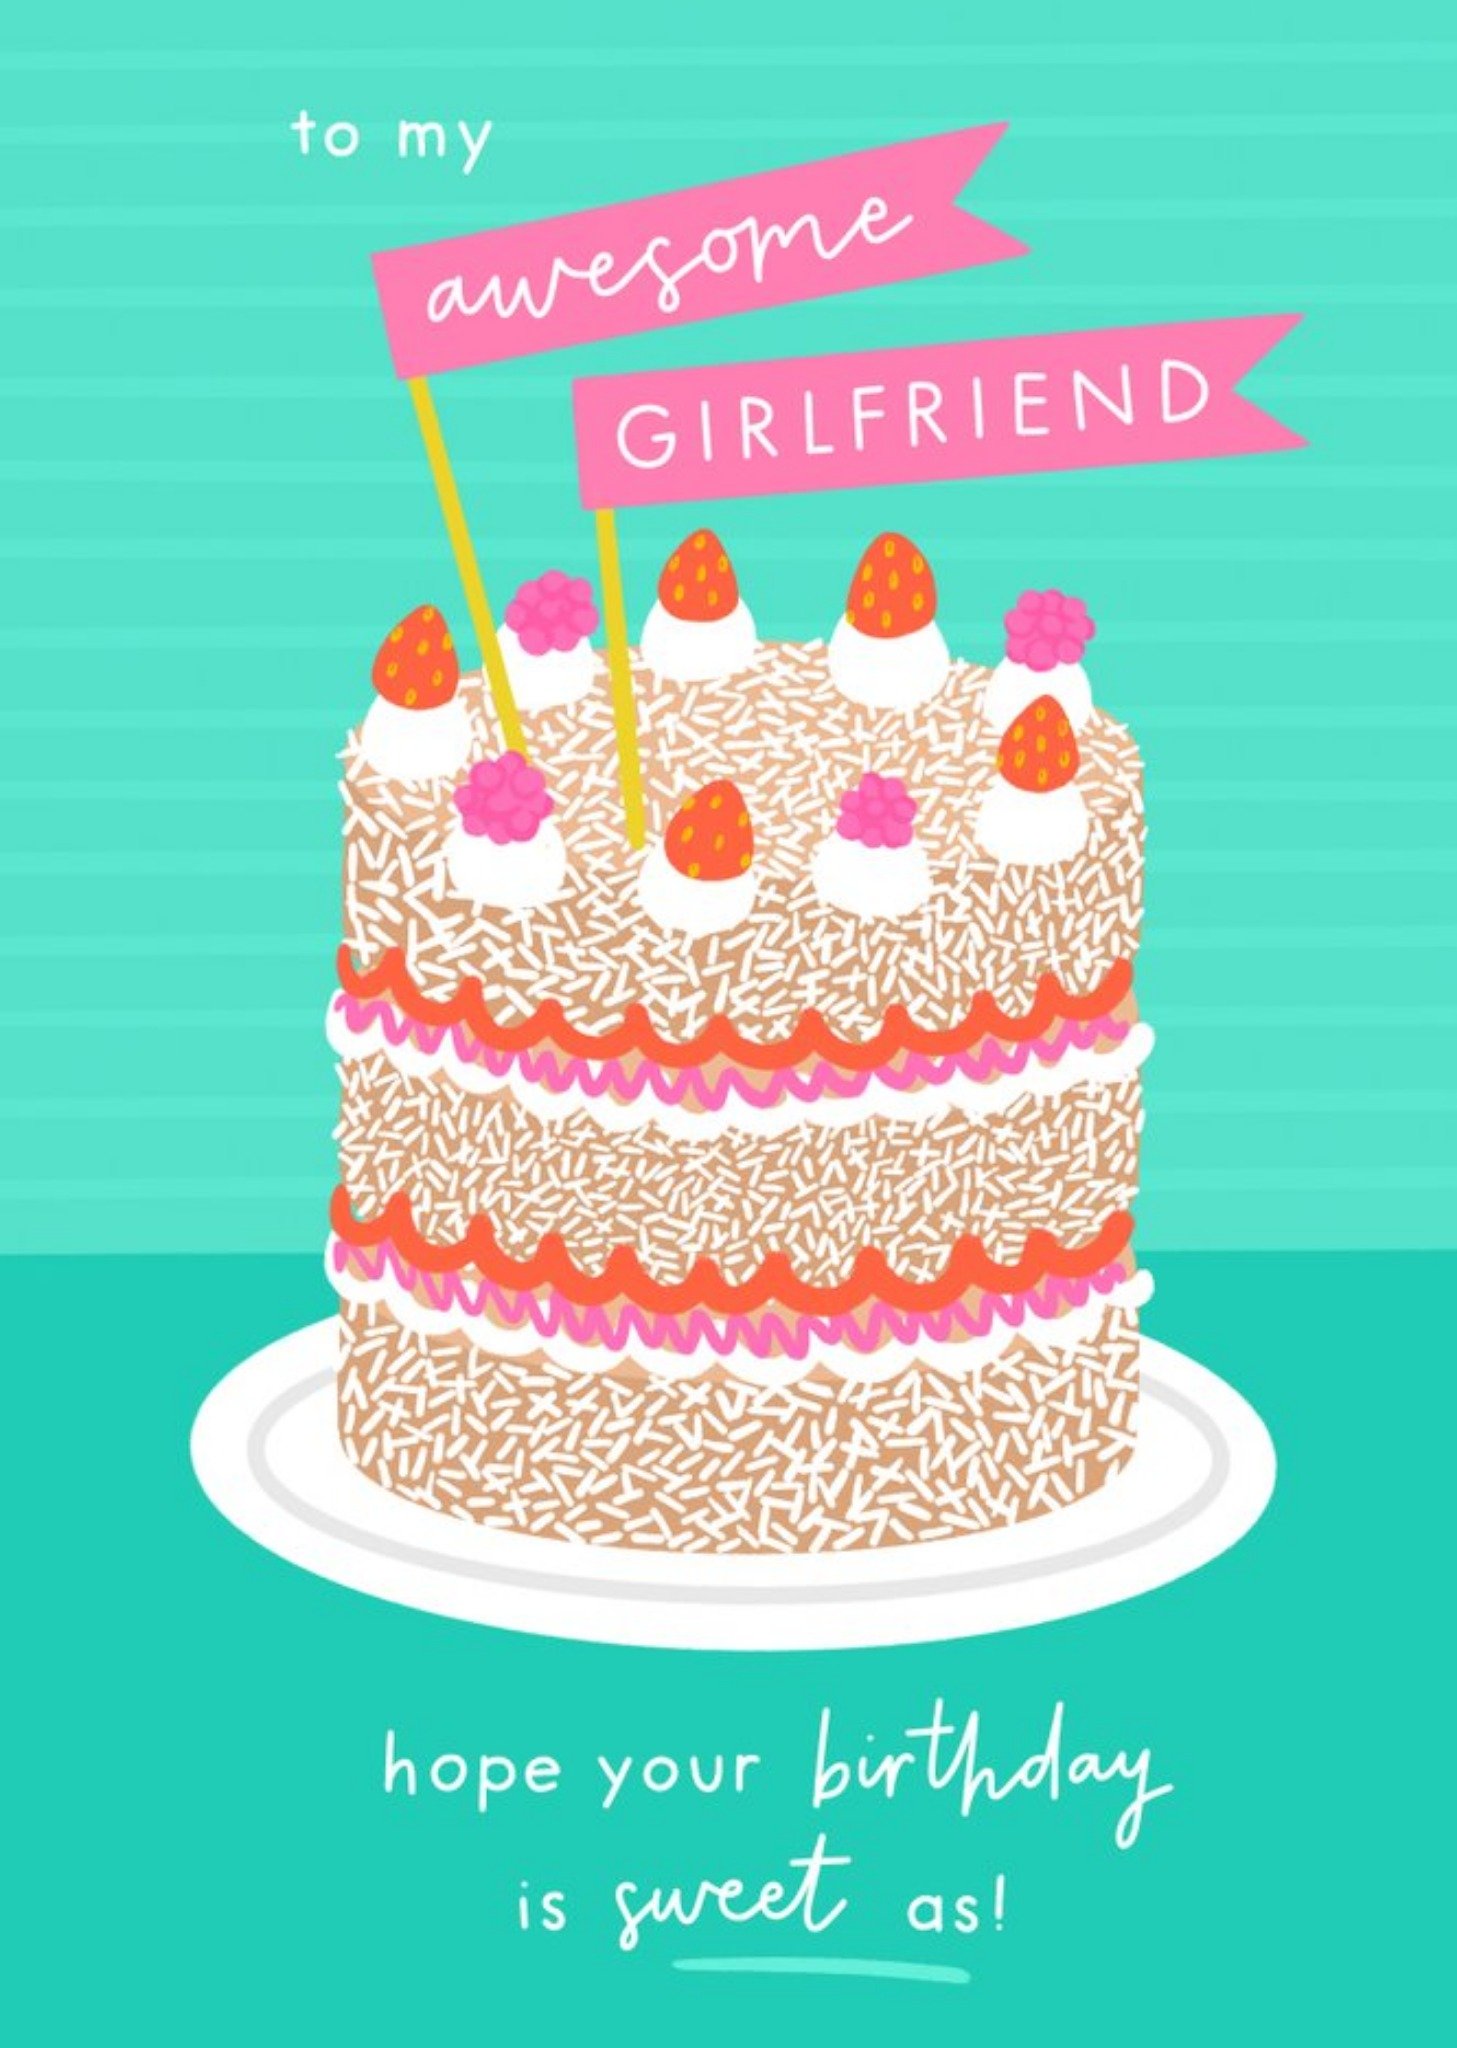 Moonpig Sorcha Faulkner Cake Sweet Girlfriend Birthday Card, Large